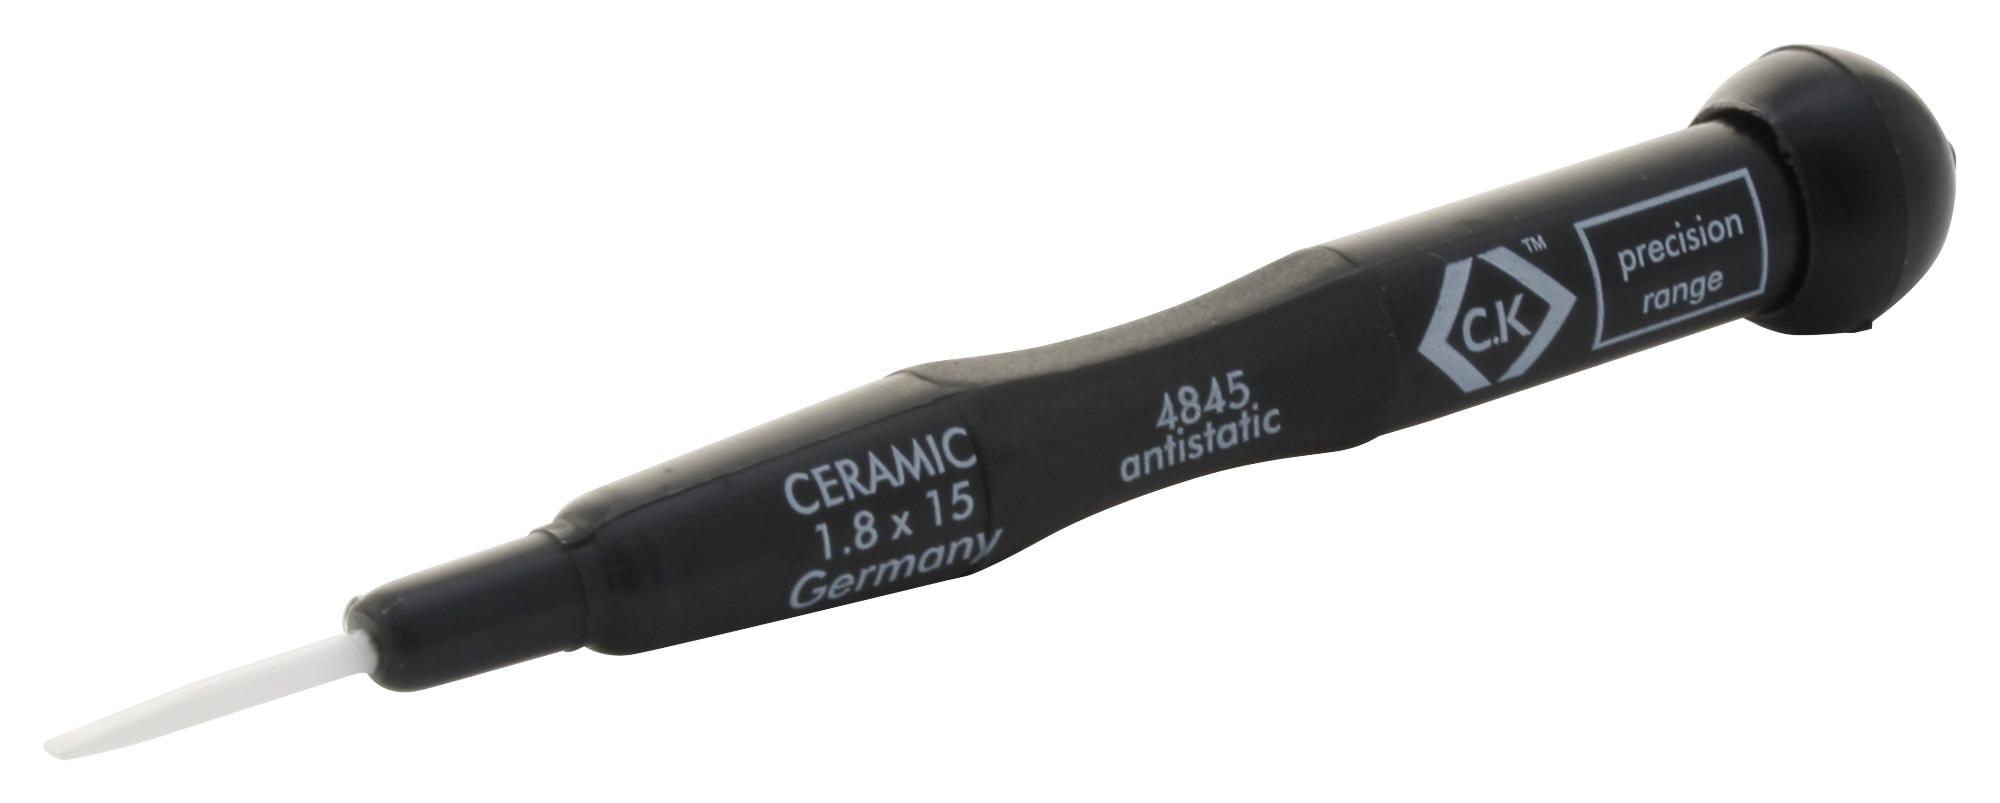 Ck Tools T4845 09 Precision Ceramic Trimmer Sl 0.9X15mm